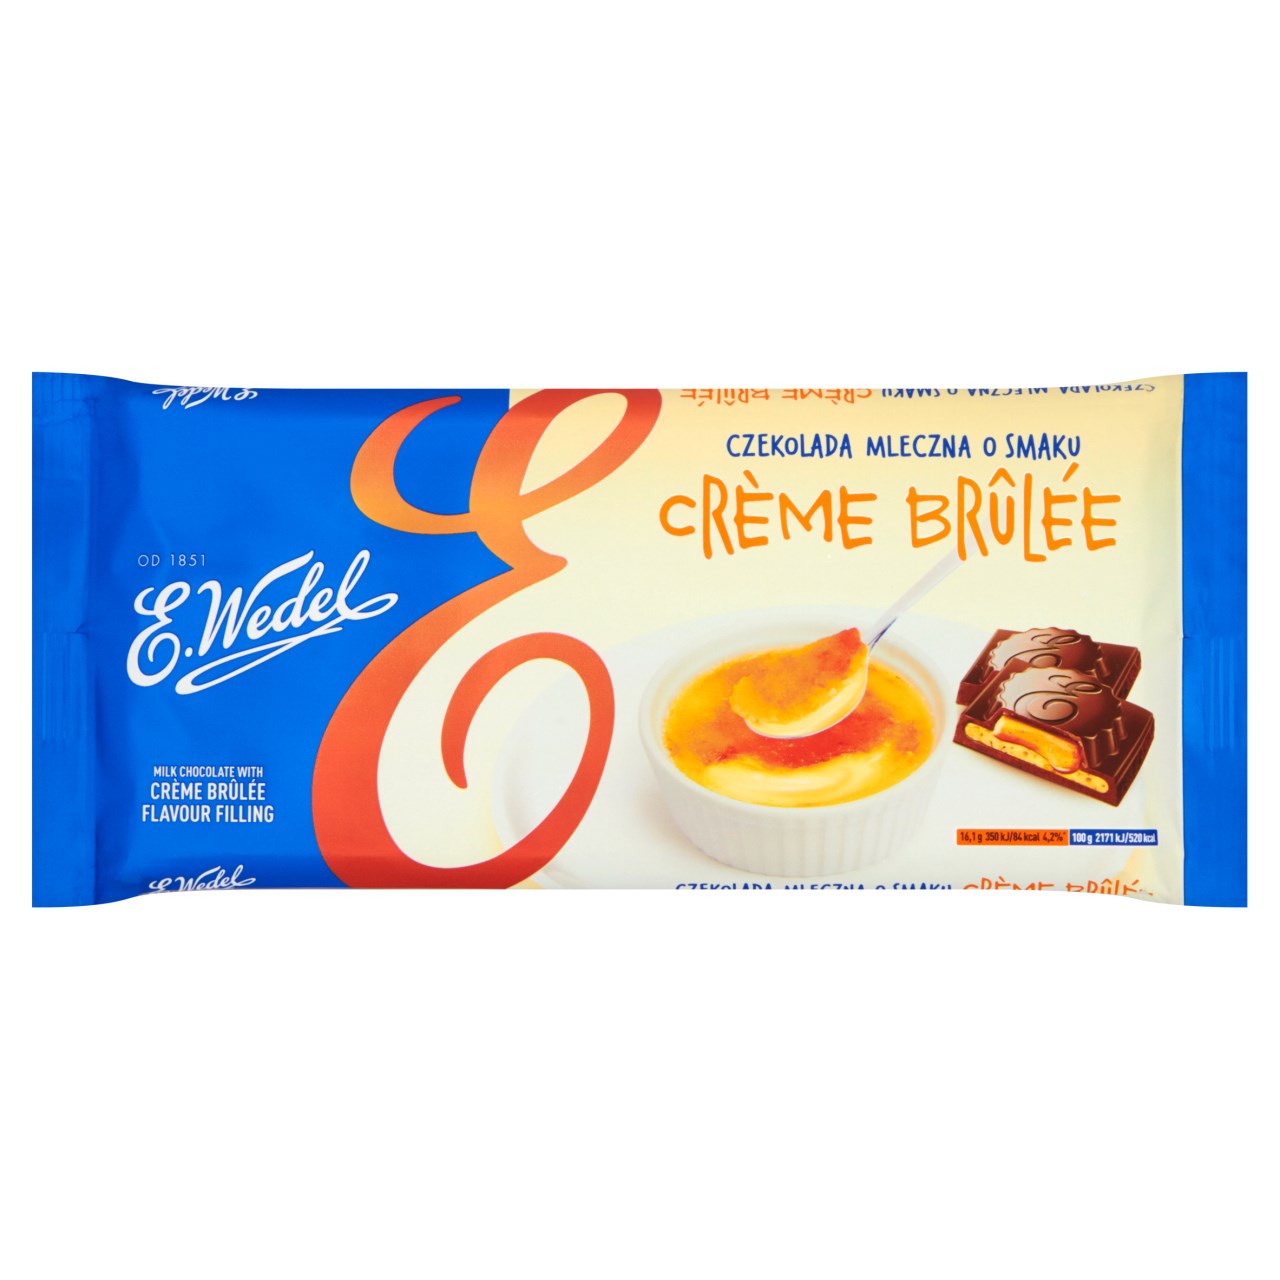 E.Wedel Czekolada mleczna o smaku crème brûlée 289 g